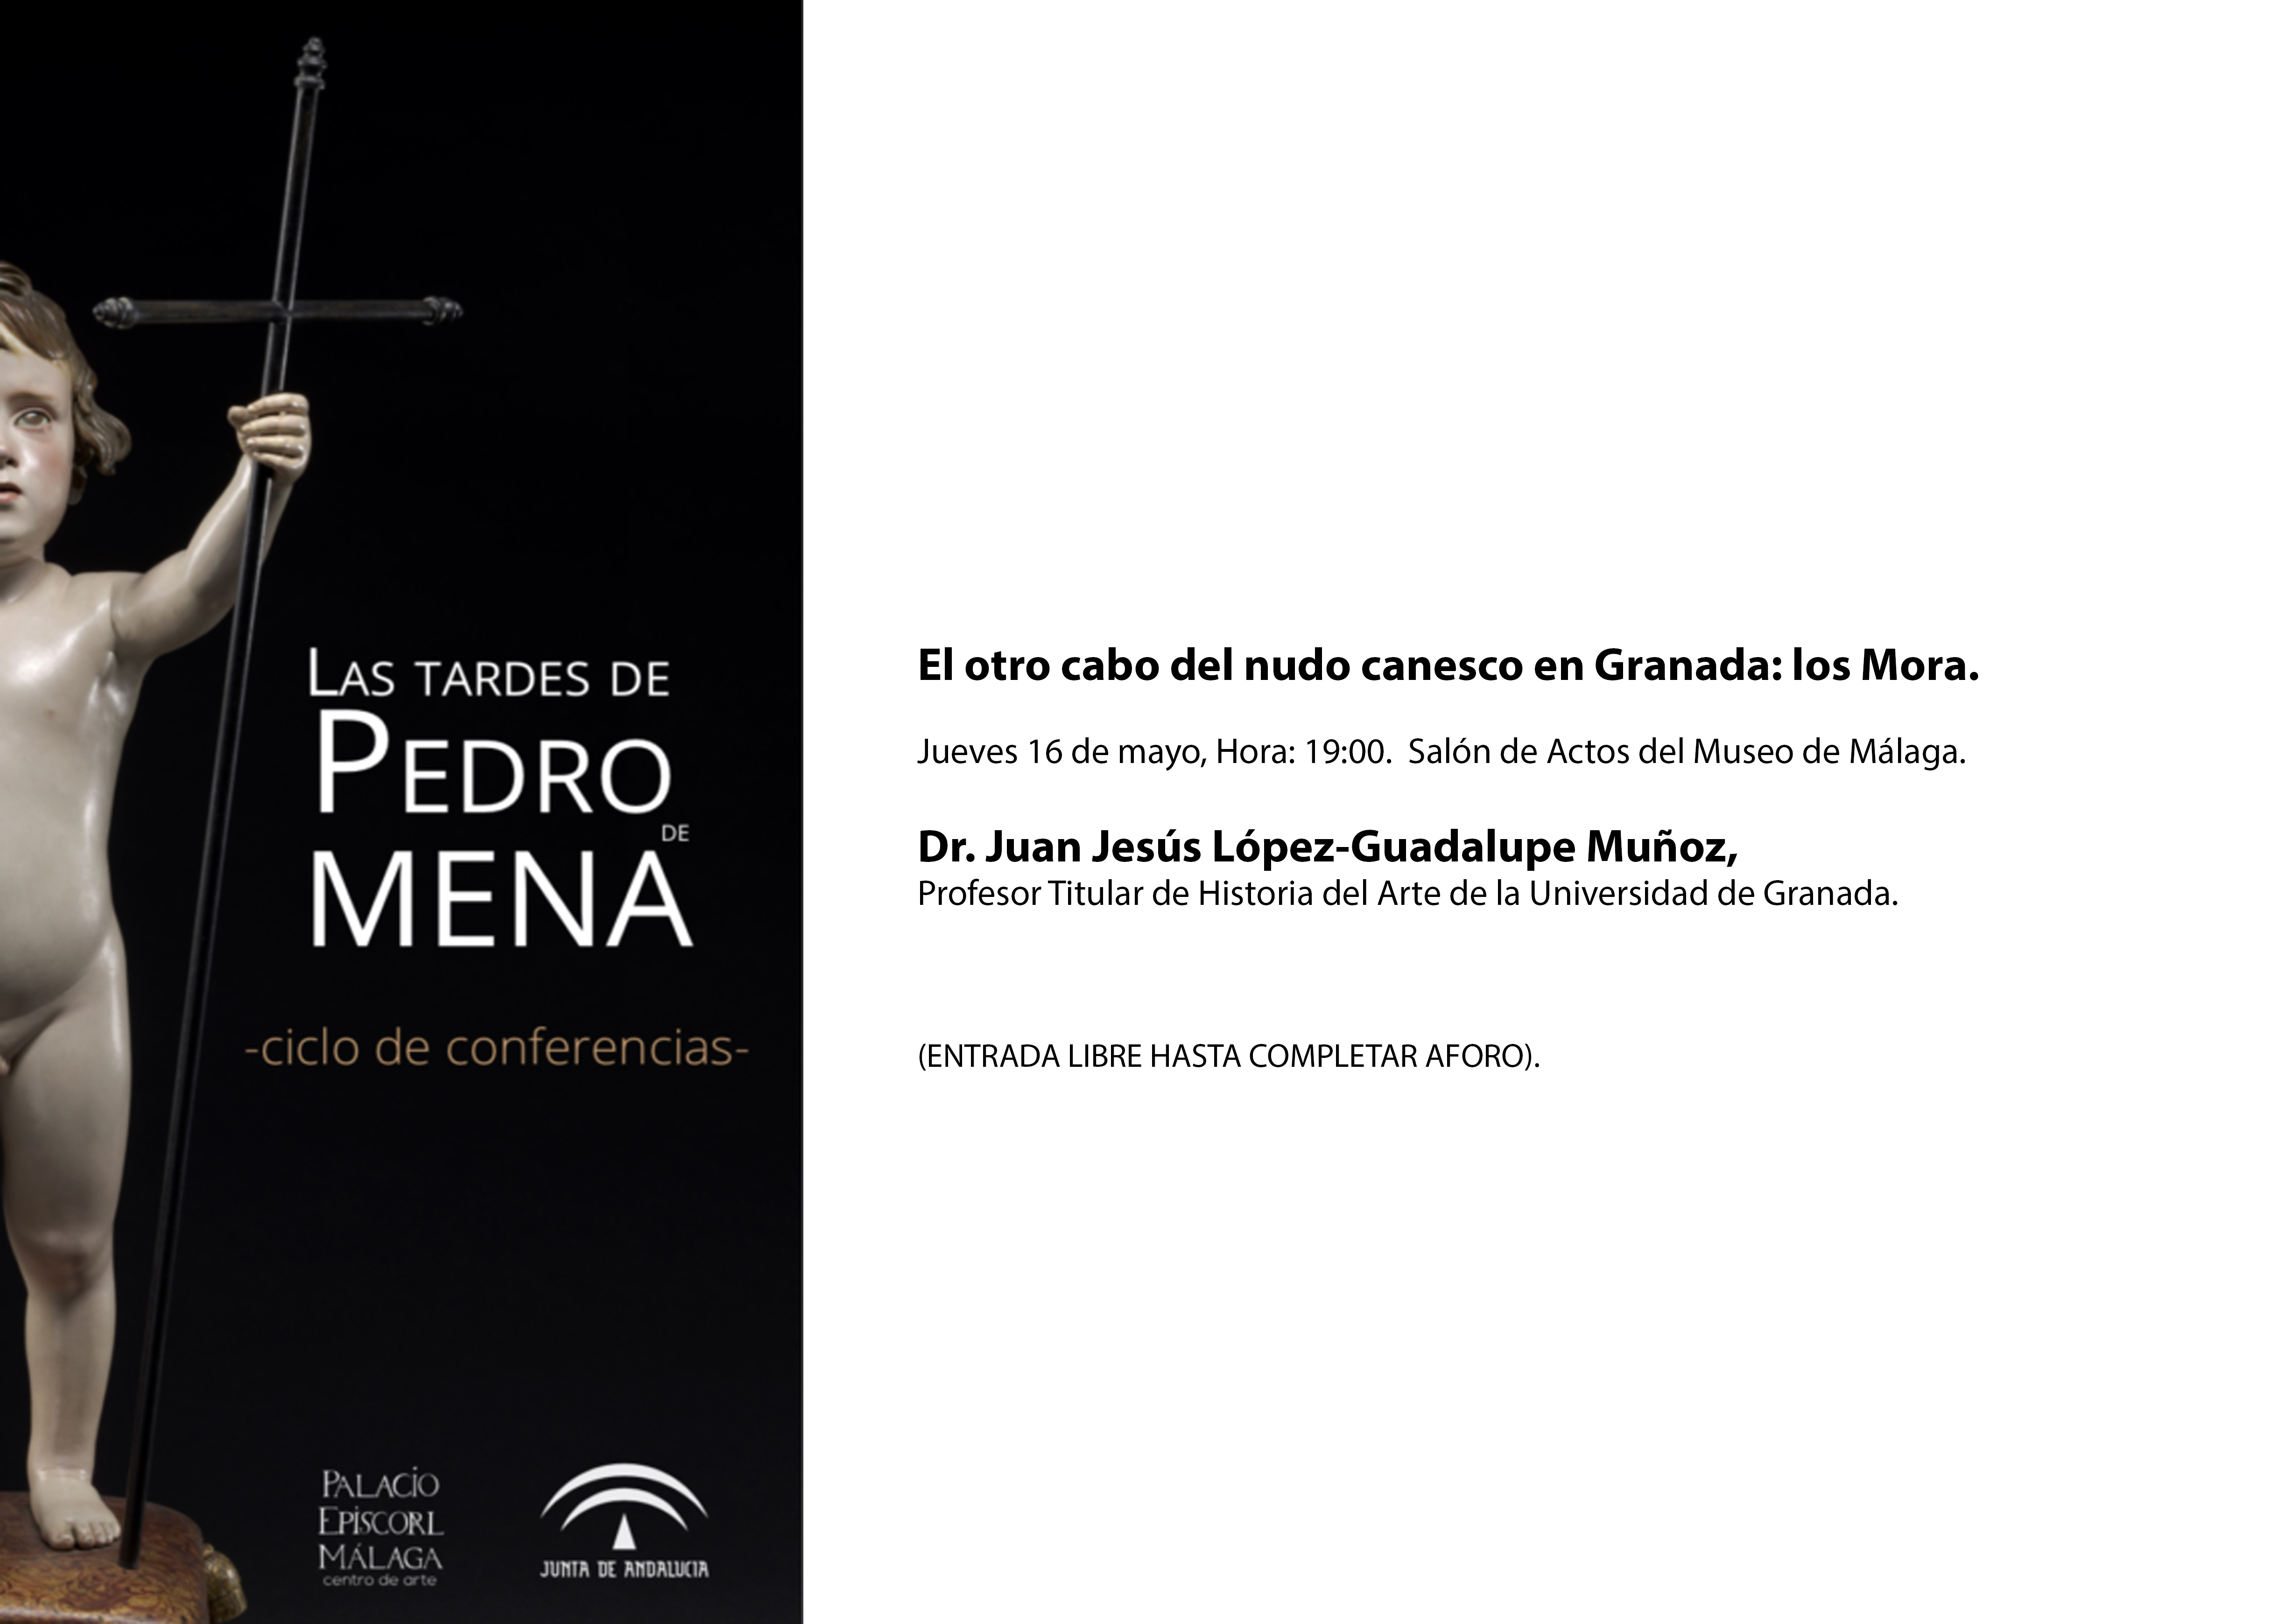 Pedro de Mena. Granatensis malacae